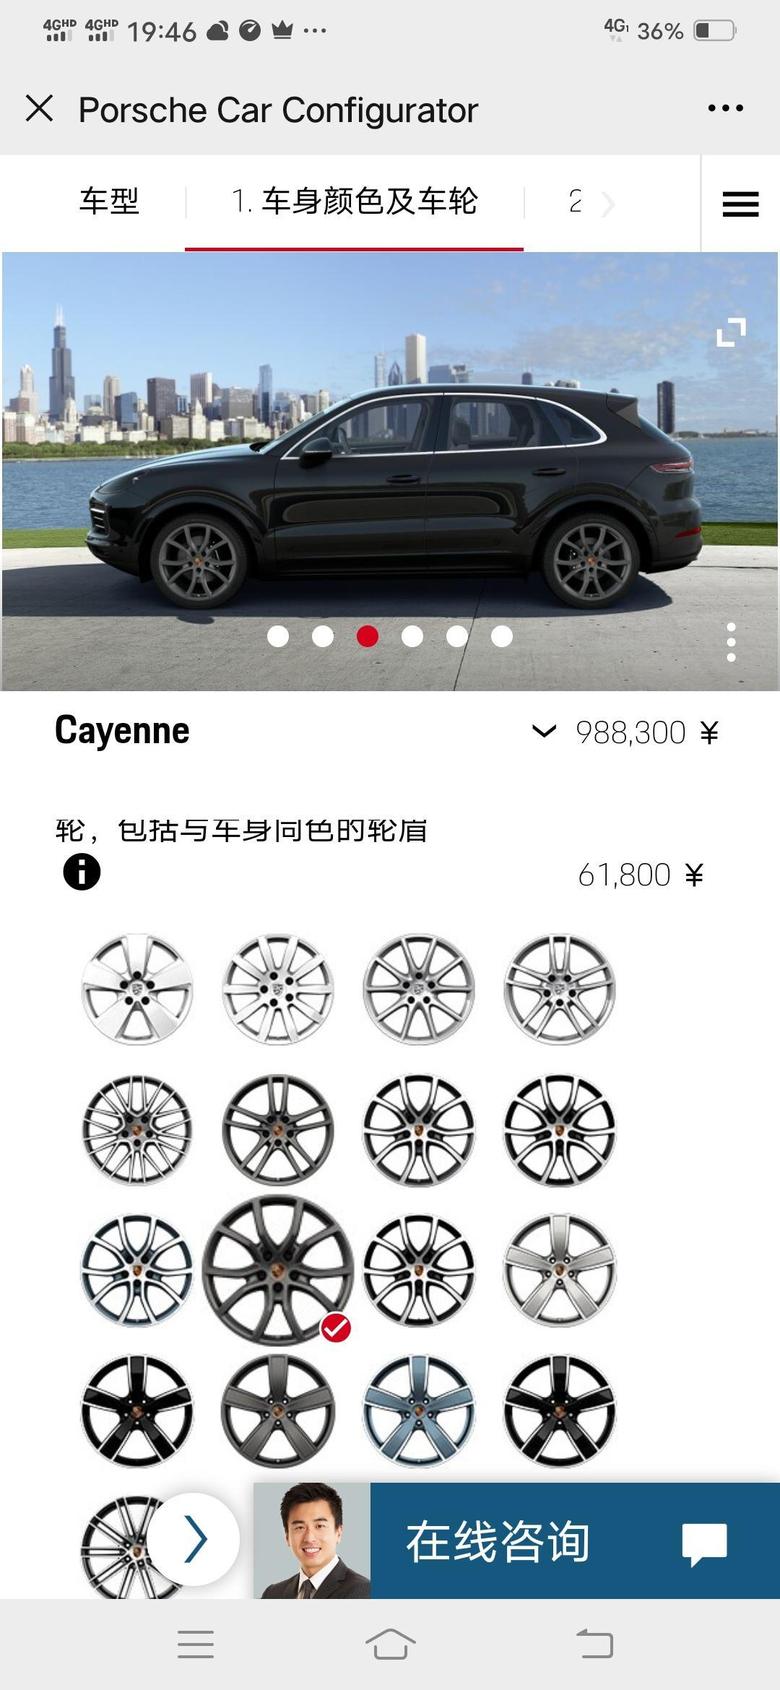 cayenne帮忙看下，黑色卡宴红色内饰搭配，这两款中的哪一种轮胎颜值高，档次高？谢谢！